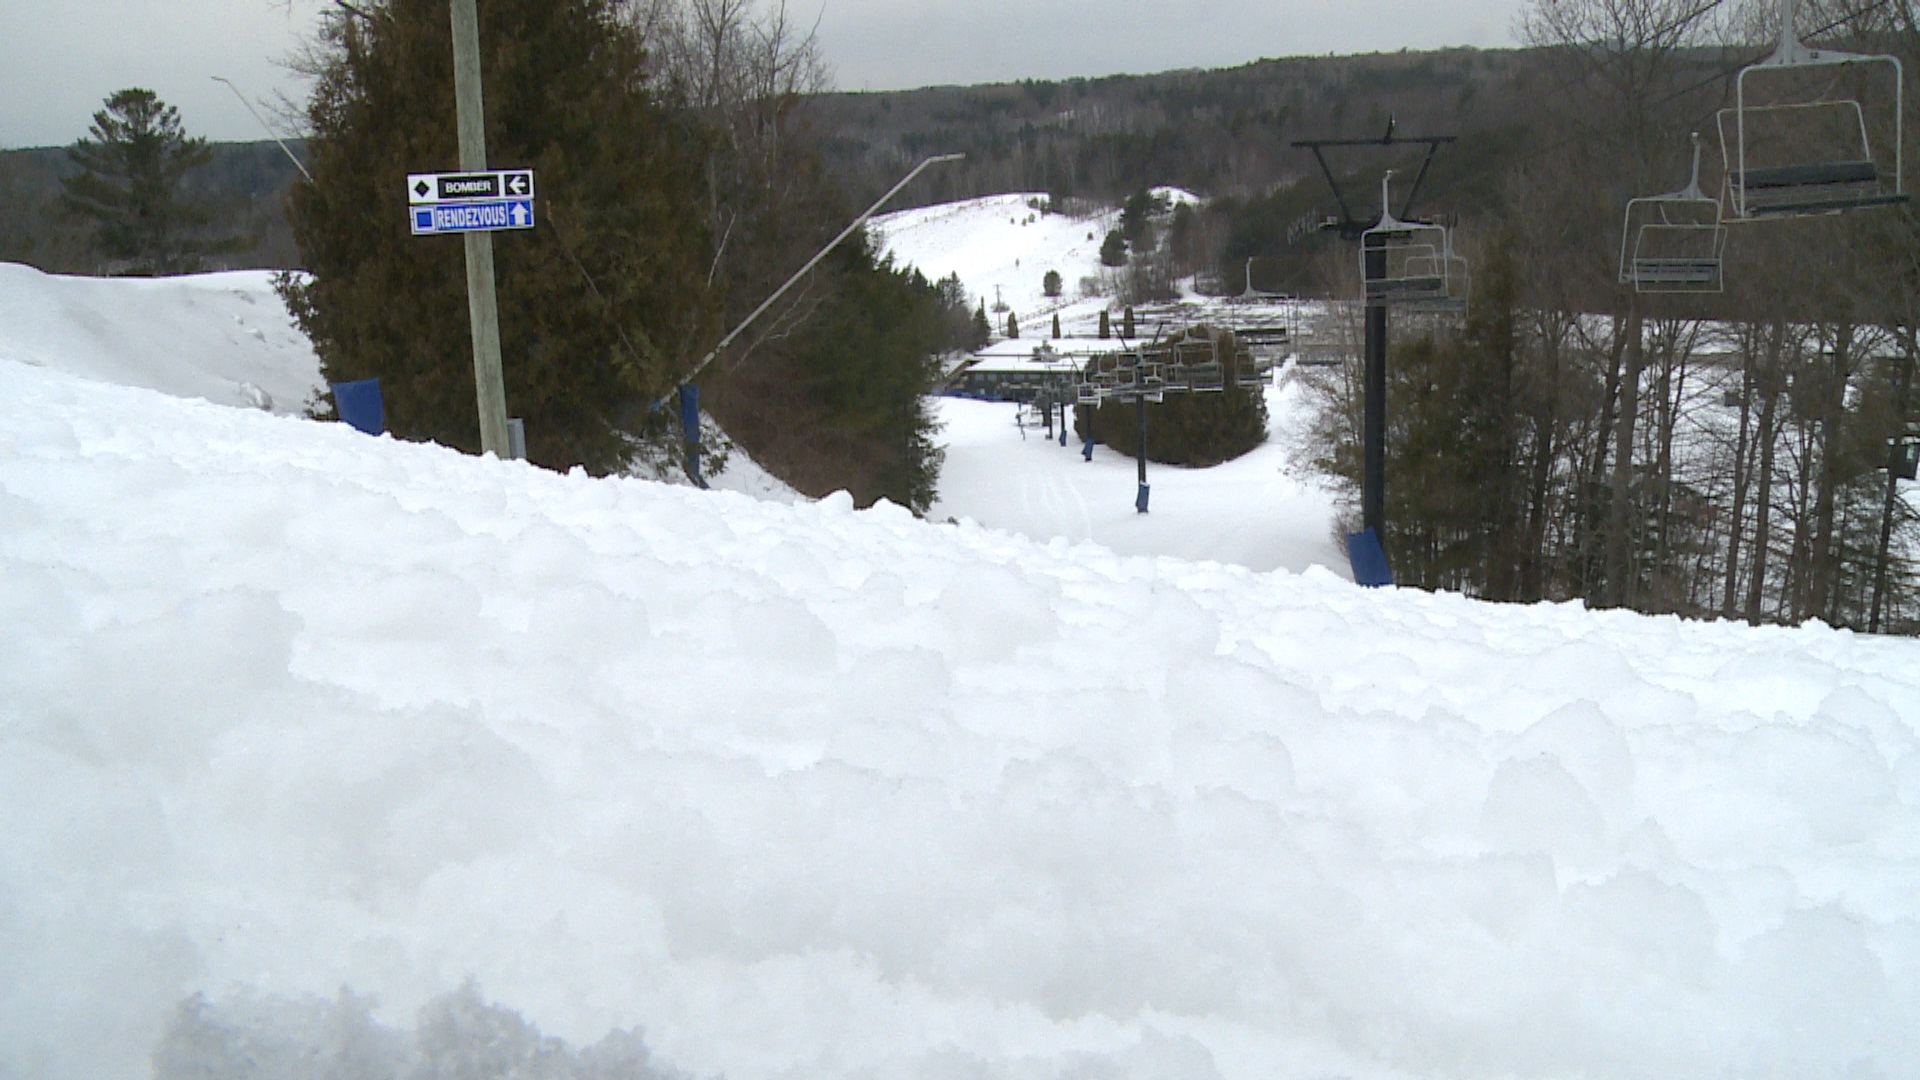 Ski resorts hoping Mother Nature brings cool temperatures amid green winter